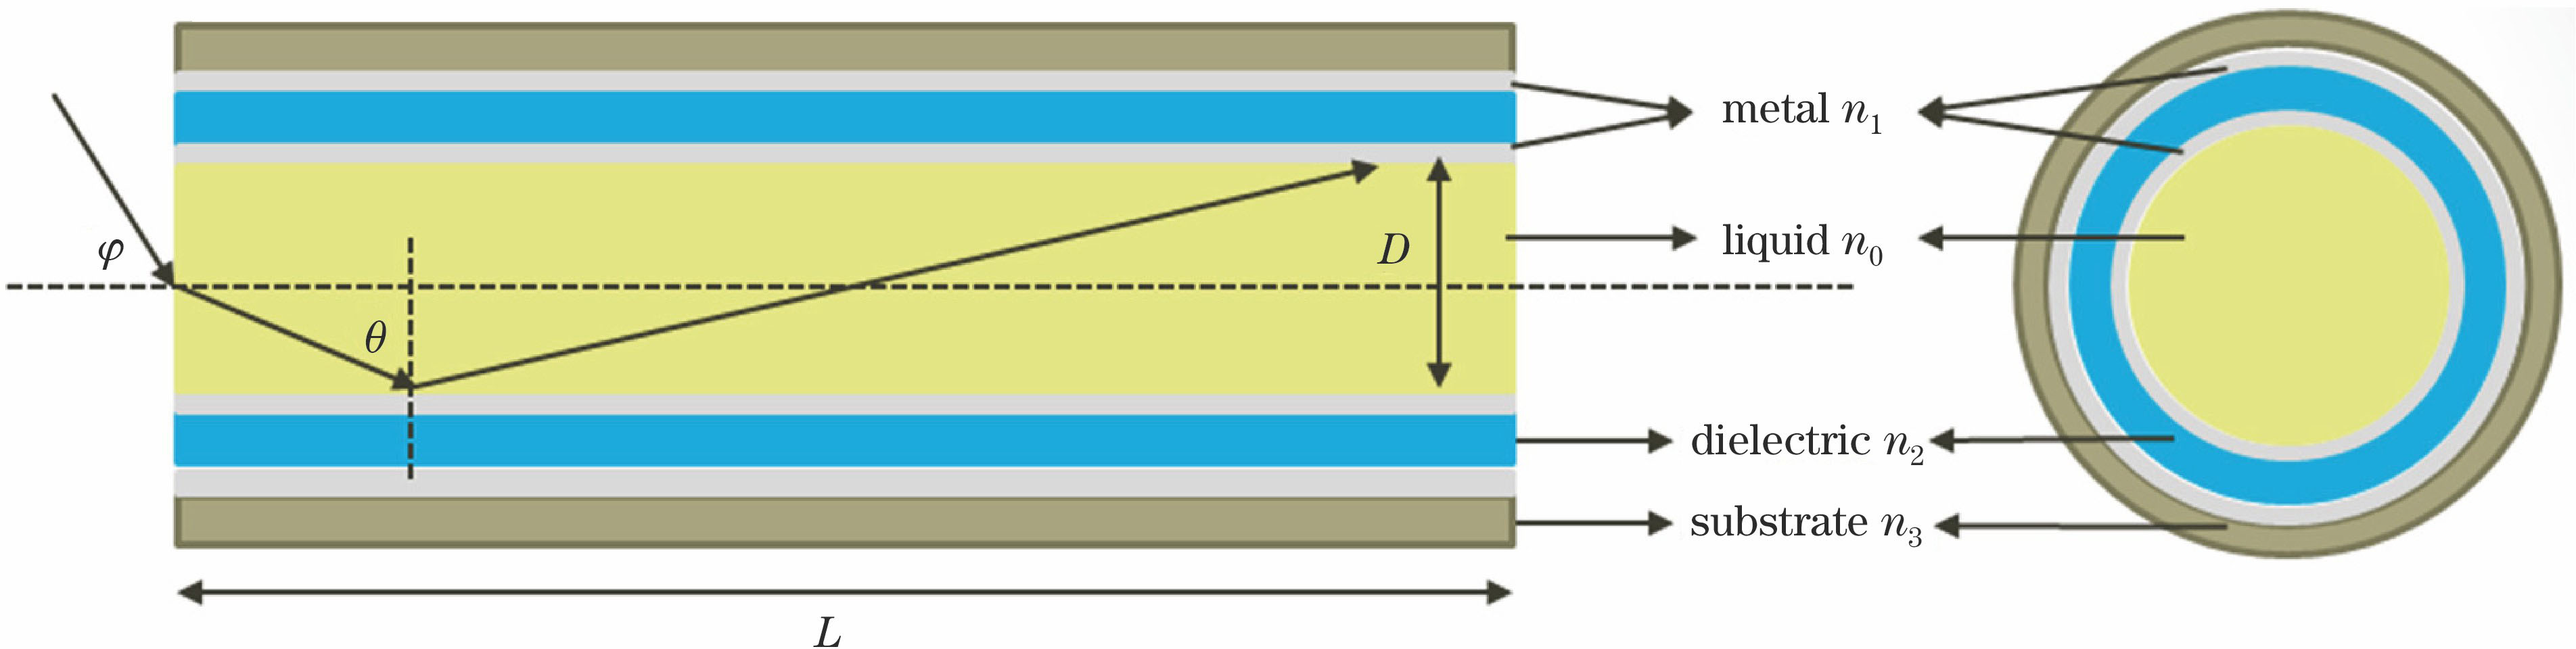 Structural diagram of MIM hollow optical fiber